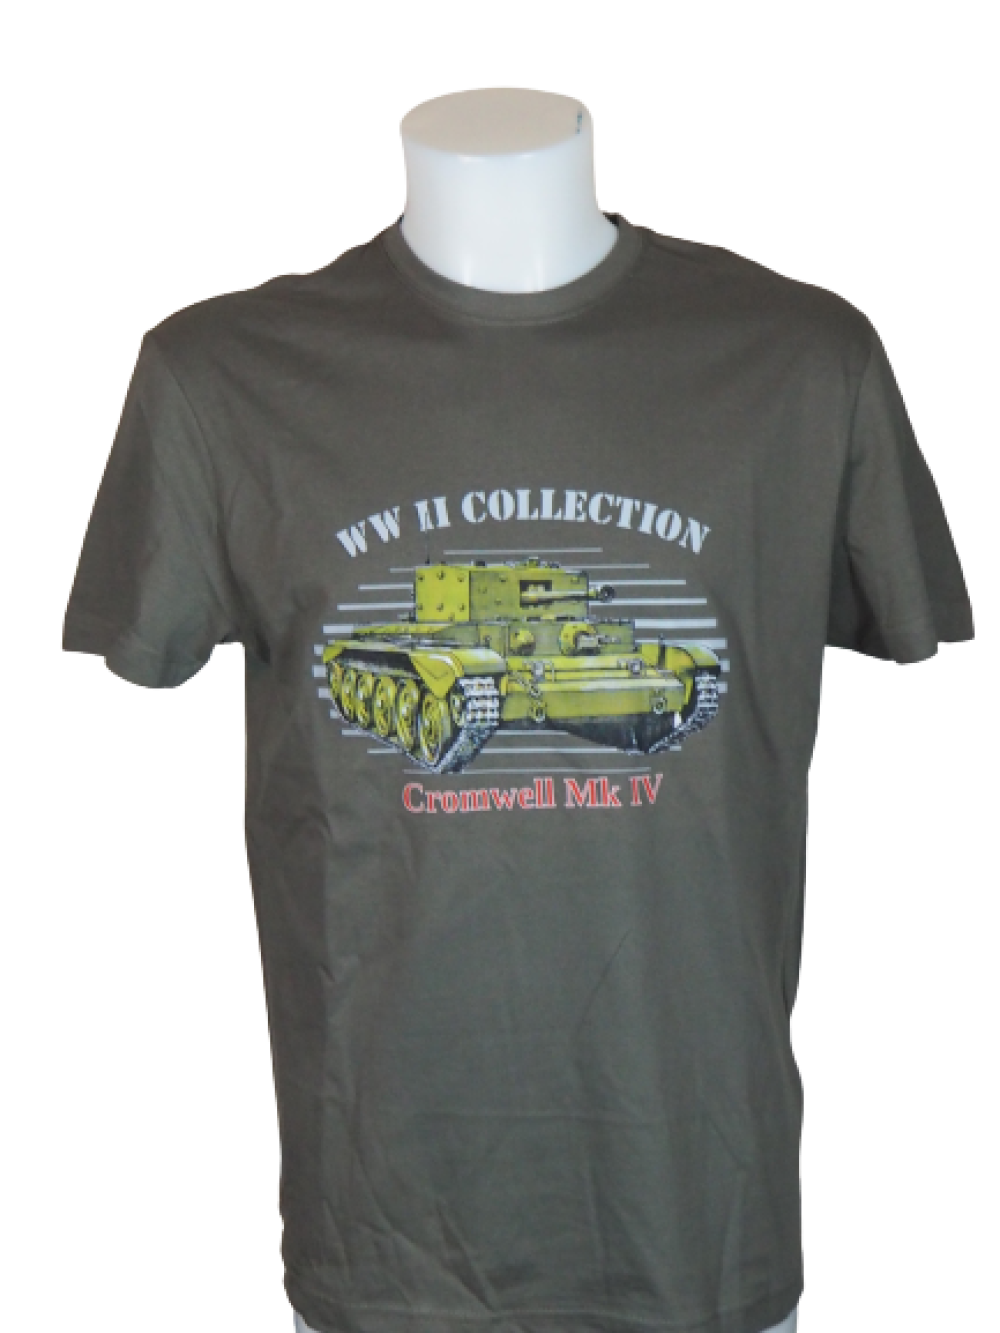 TBT 01 Tričko s motivem tank CROMWELL IV barva šedá břidlice